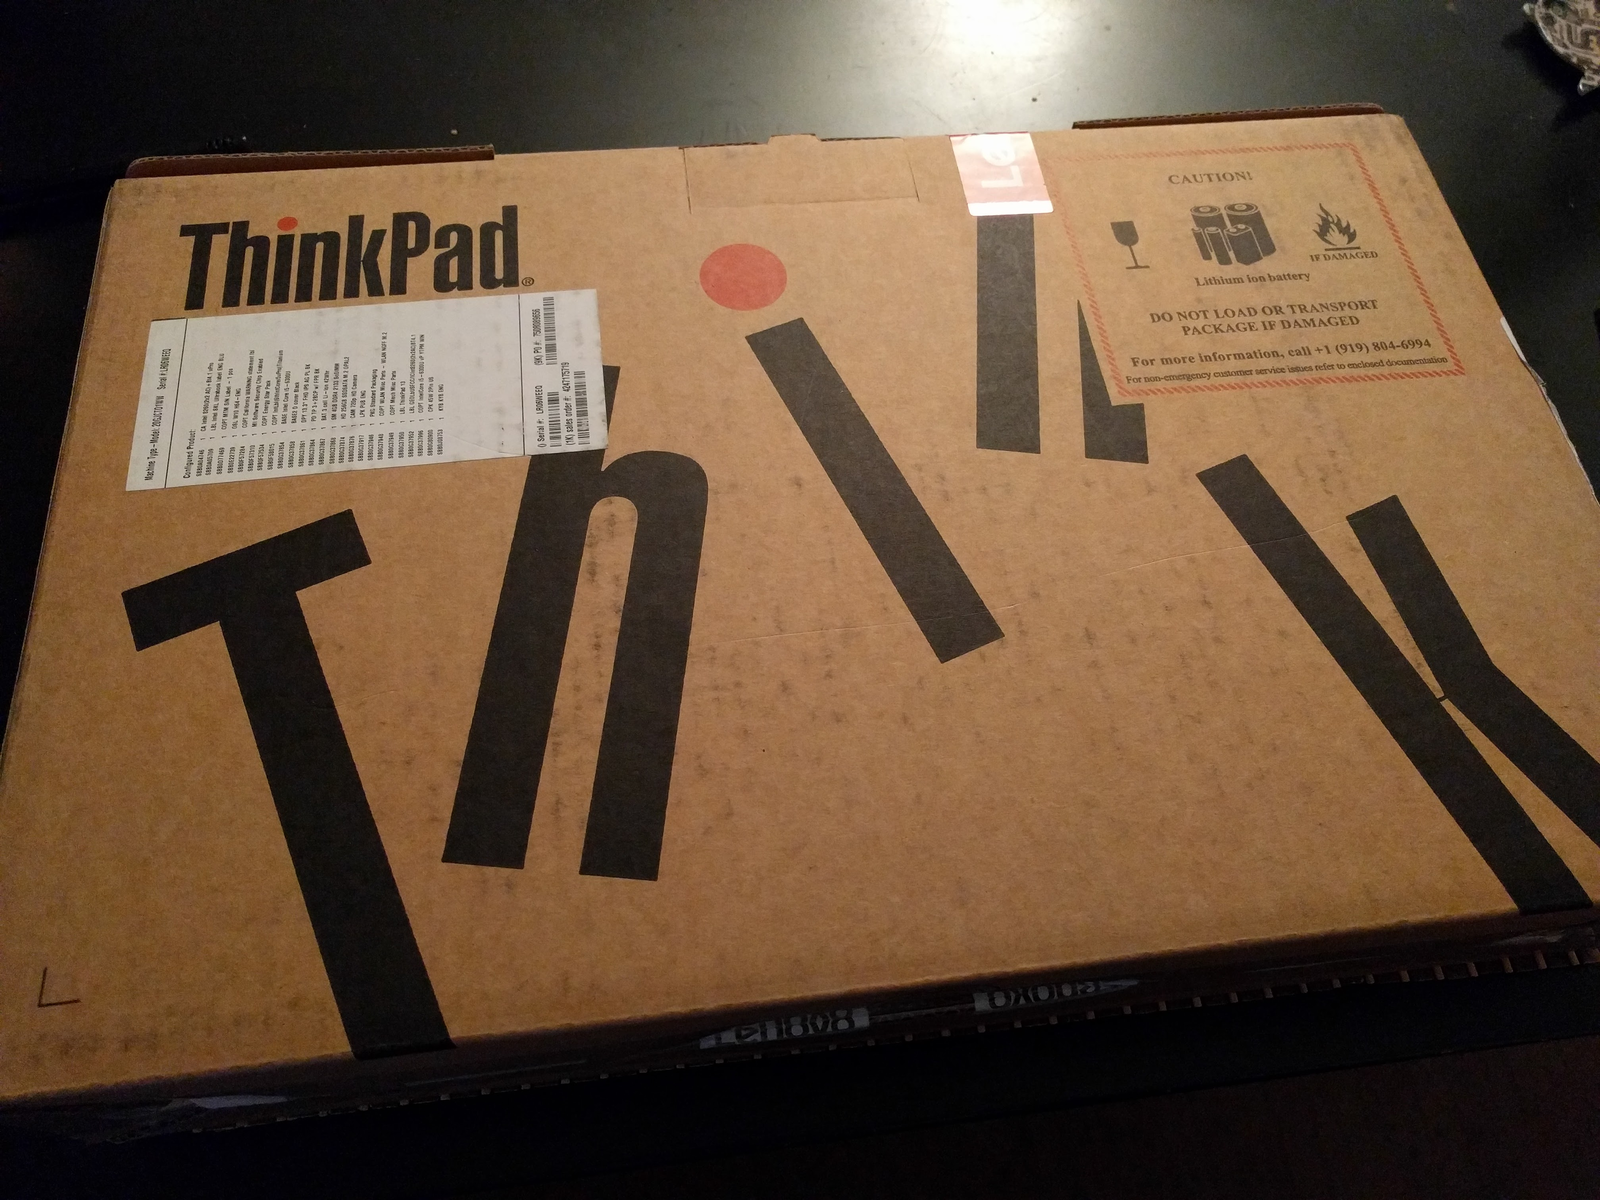 Thinkpad Box